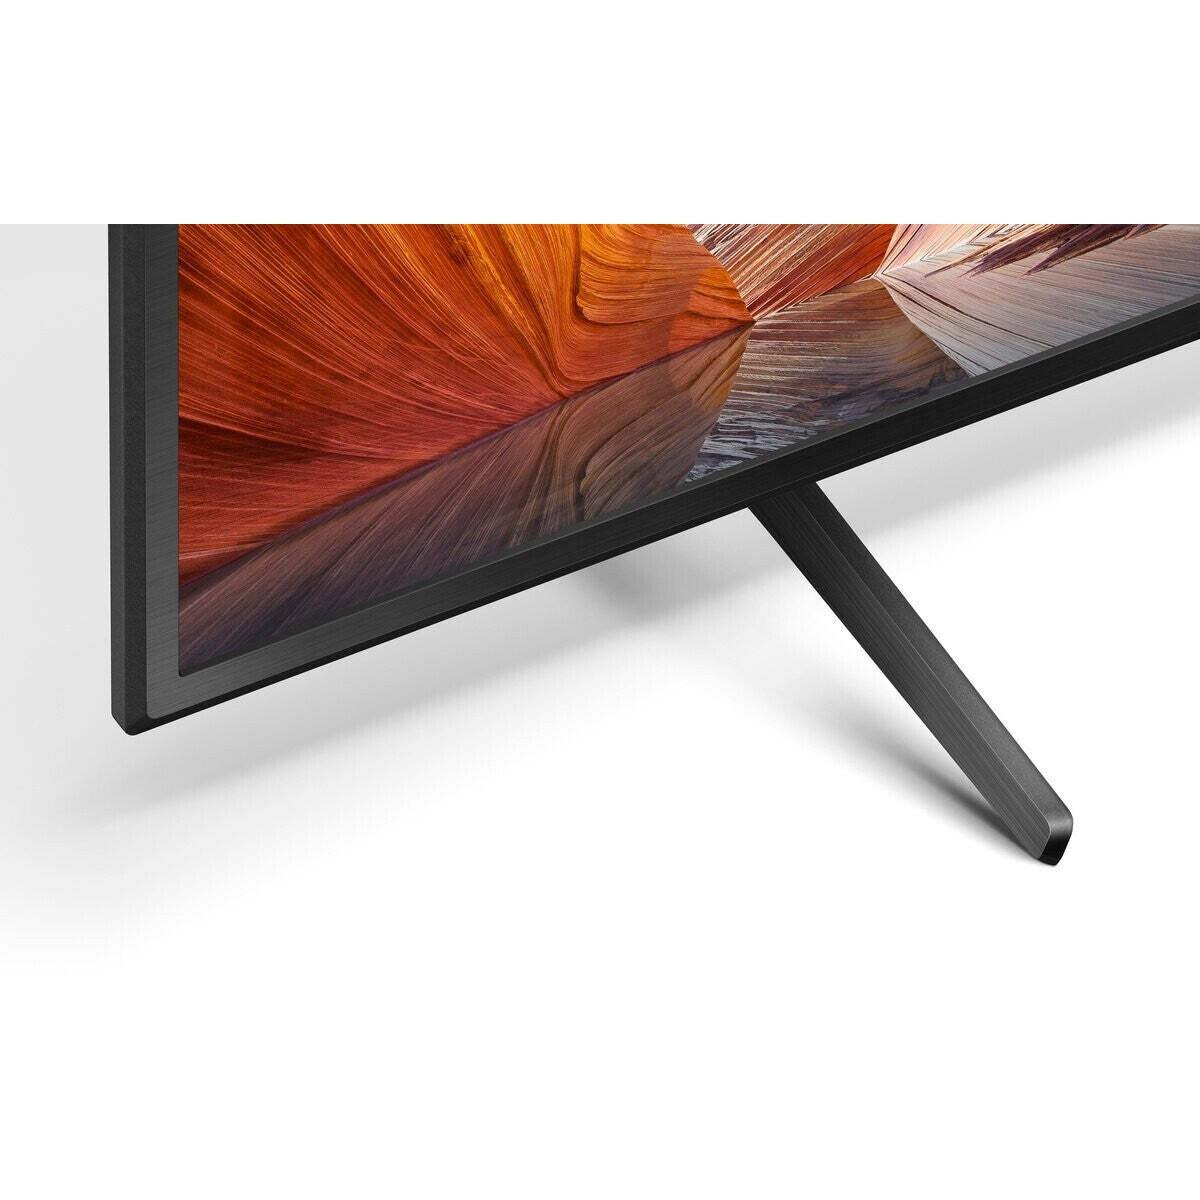 Smart televízor Sony KD-43X81J (2021) / 43&quot; (108 cm)